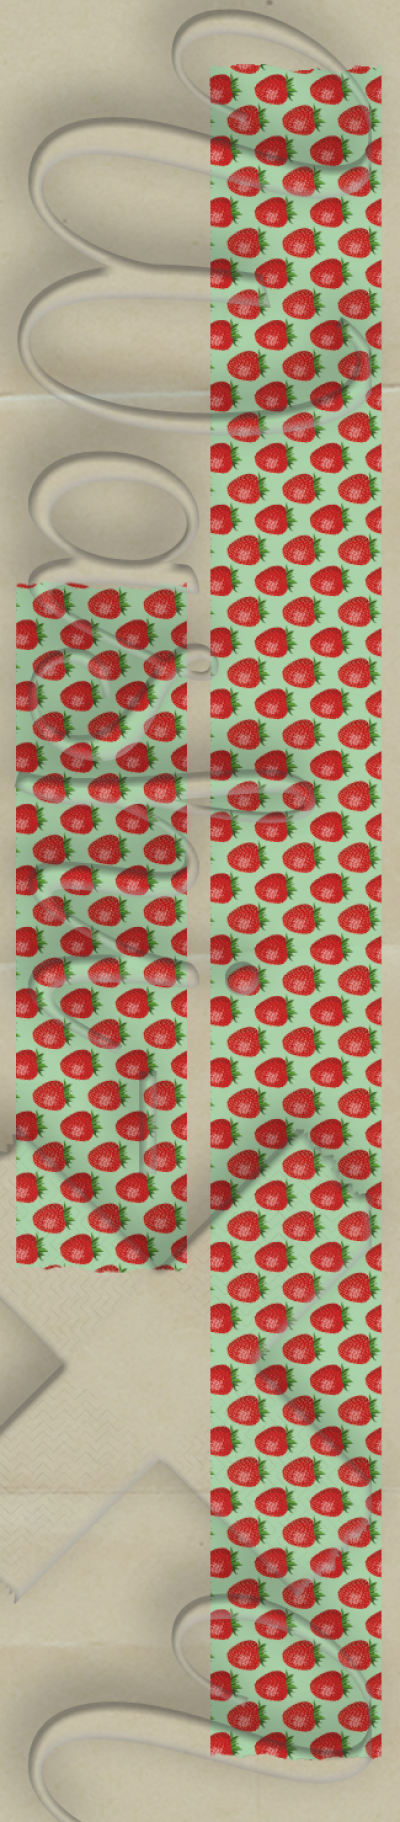 Strawberry patterned washi tape